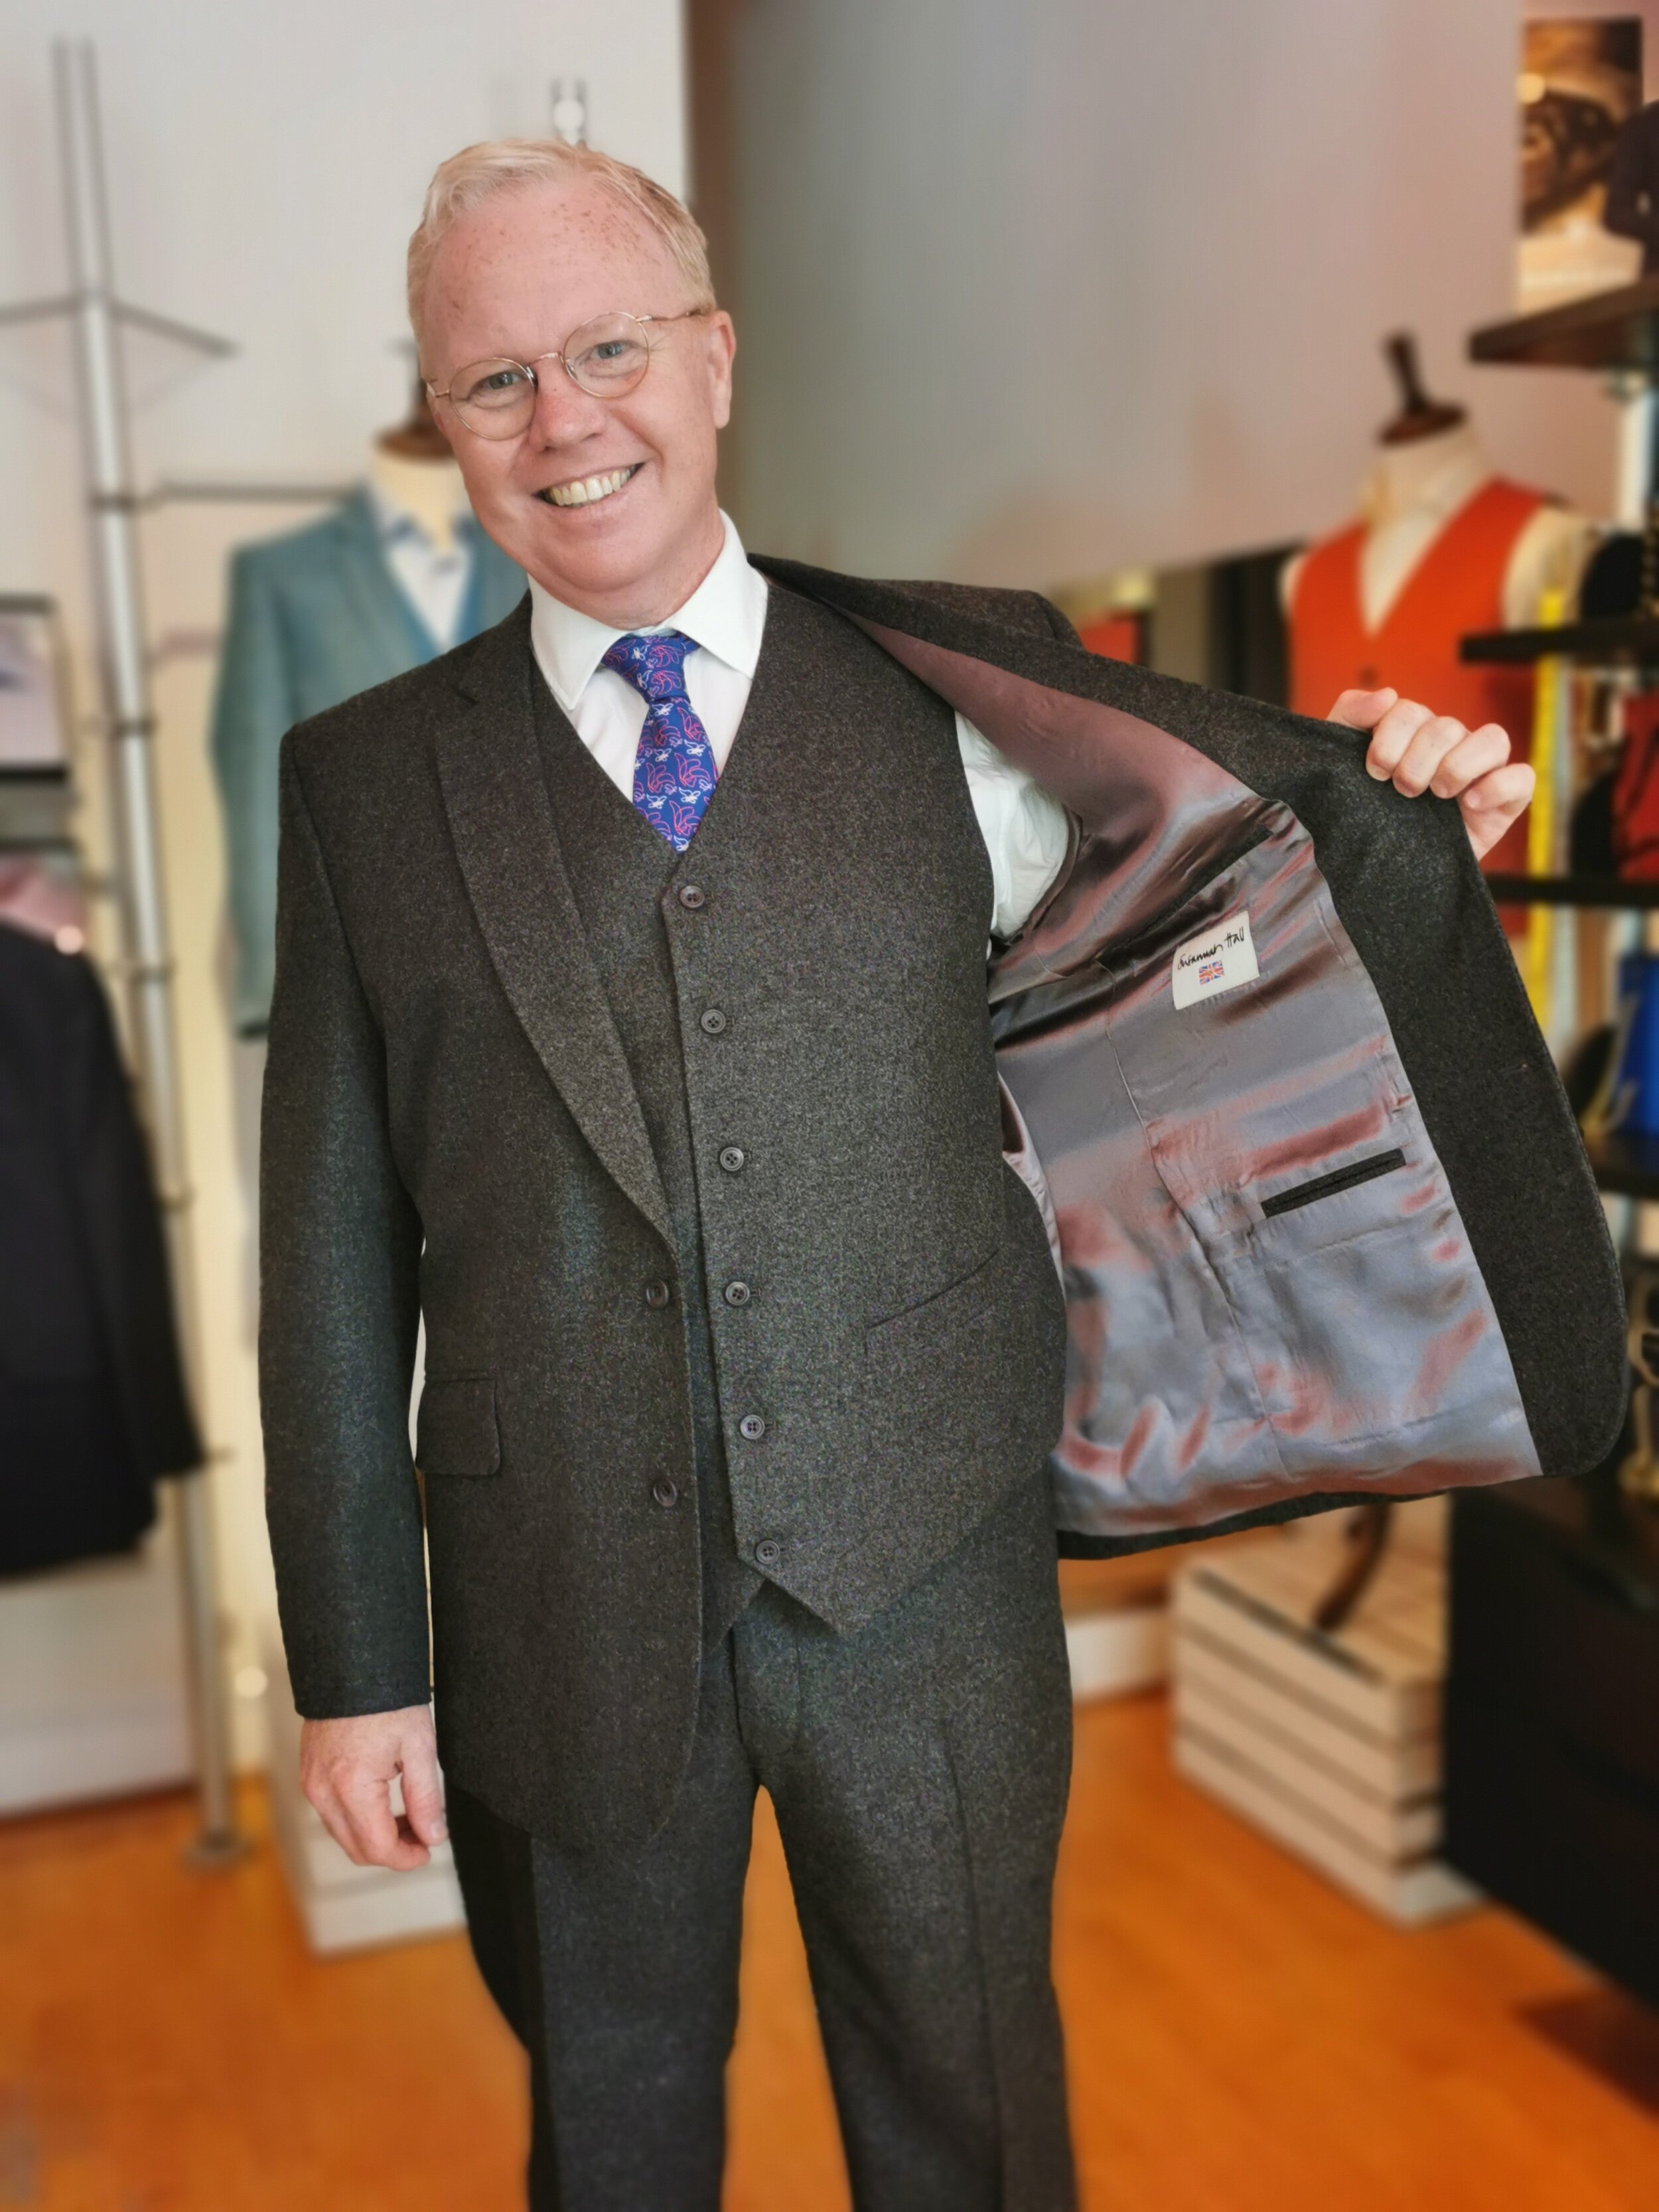 bespoke-suit-tailor-fitting-susannah-hall-british-made-flannel-waistcoat.jpg